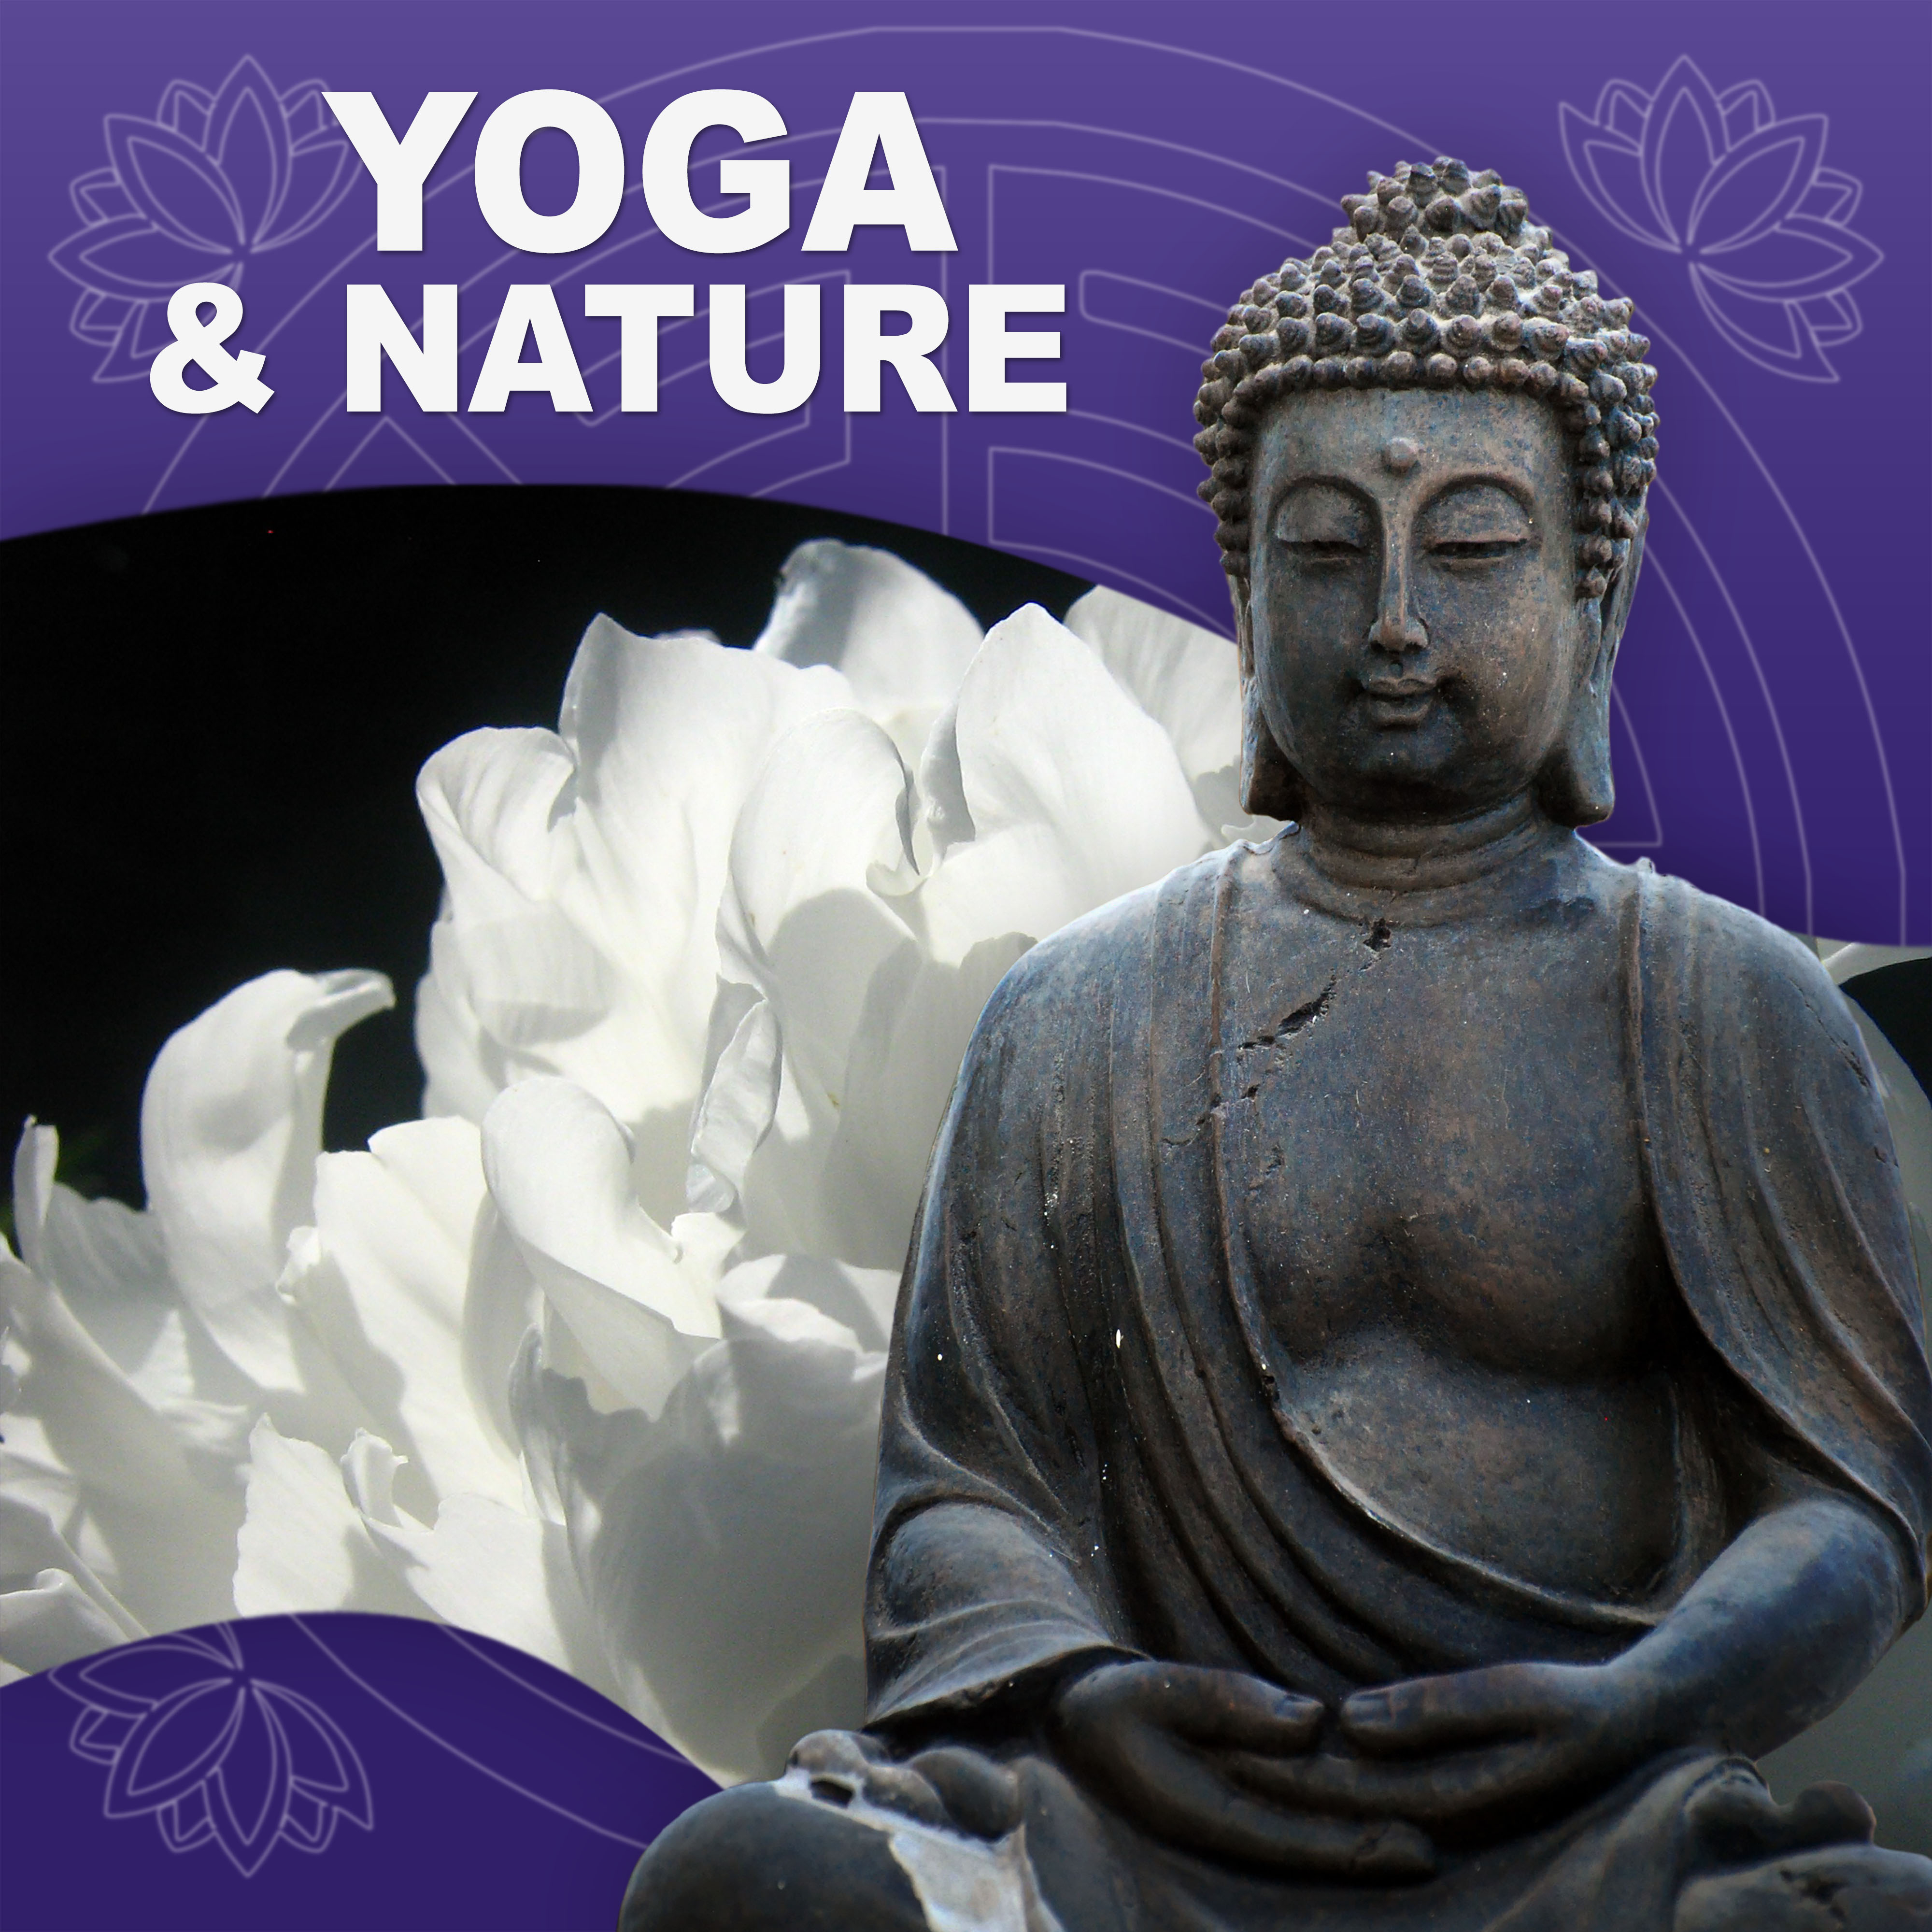 Yoga  Nature  Nature Sounds for Yoga Meditation, Mantra, Kundalini Yoga, Asian Zen Spa, Reiki, Yoga Healing, Relaxation Meditation, Nature Sounds